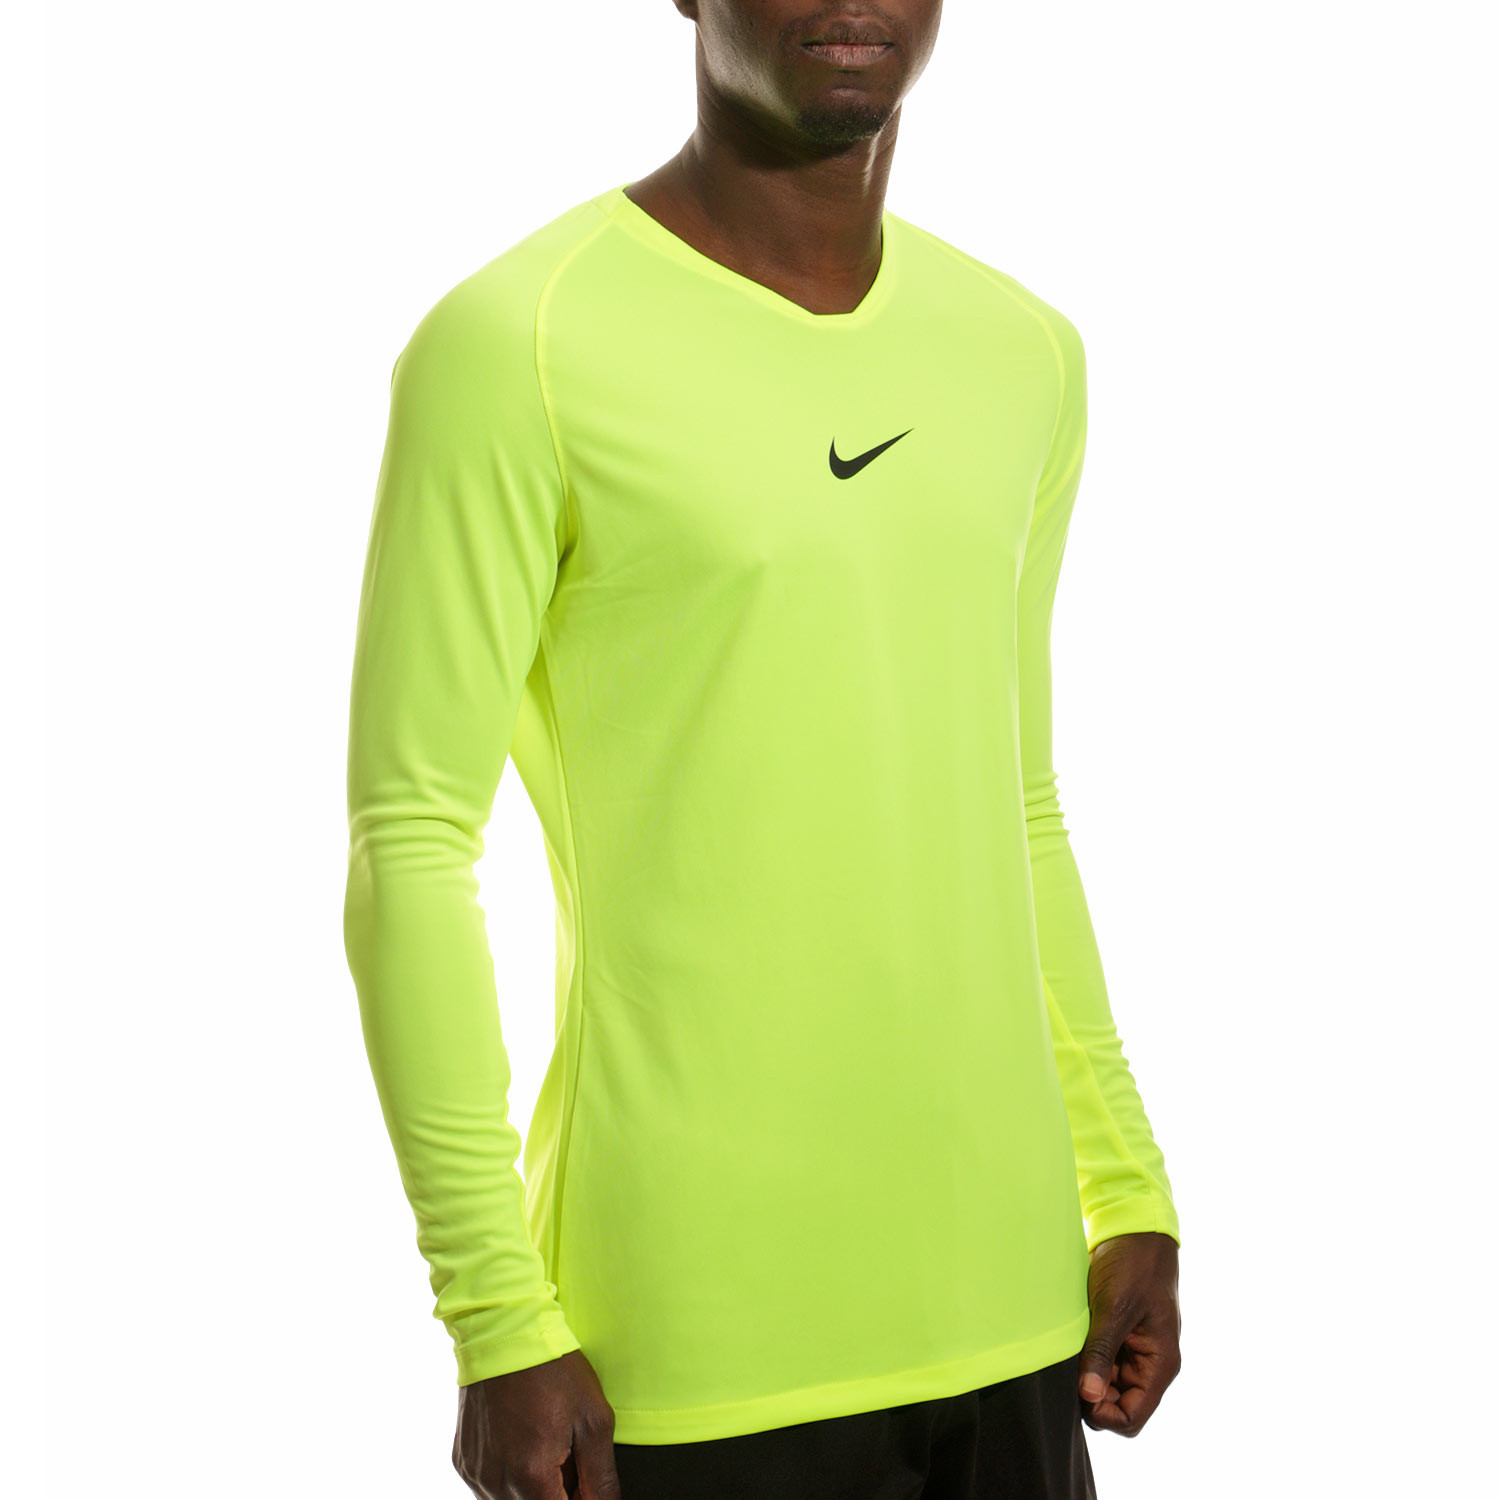 Camiseta manga larga Nike lima |futbolmania